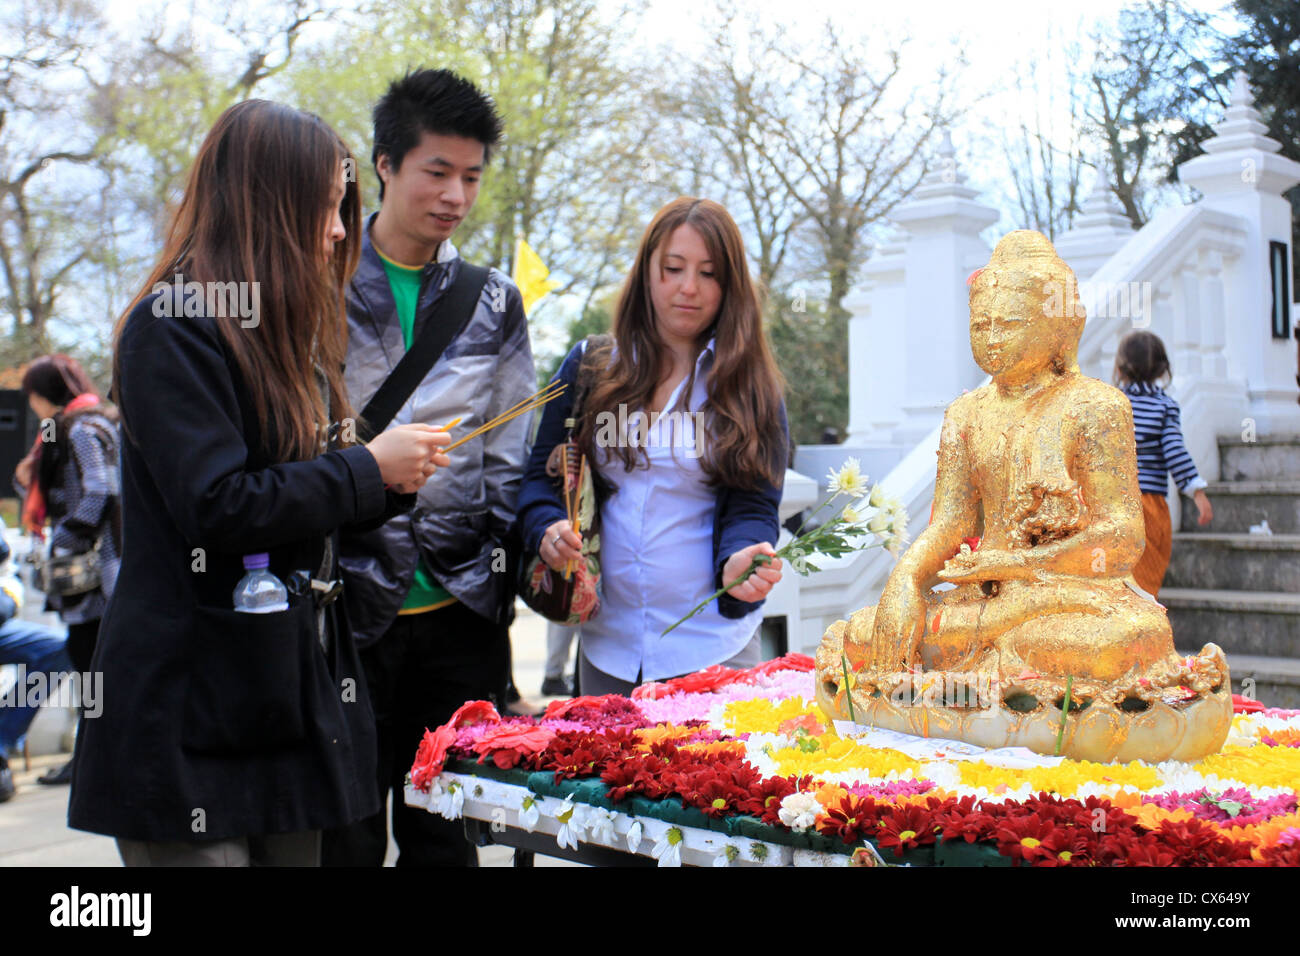 Celebration of Thai new year at Buddhapadipa Temple, London Stock Photo